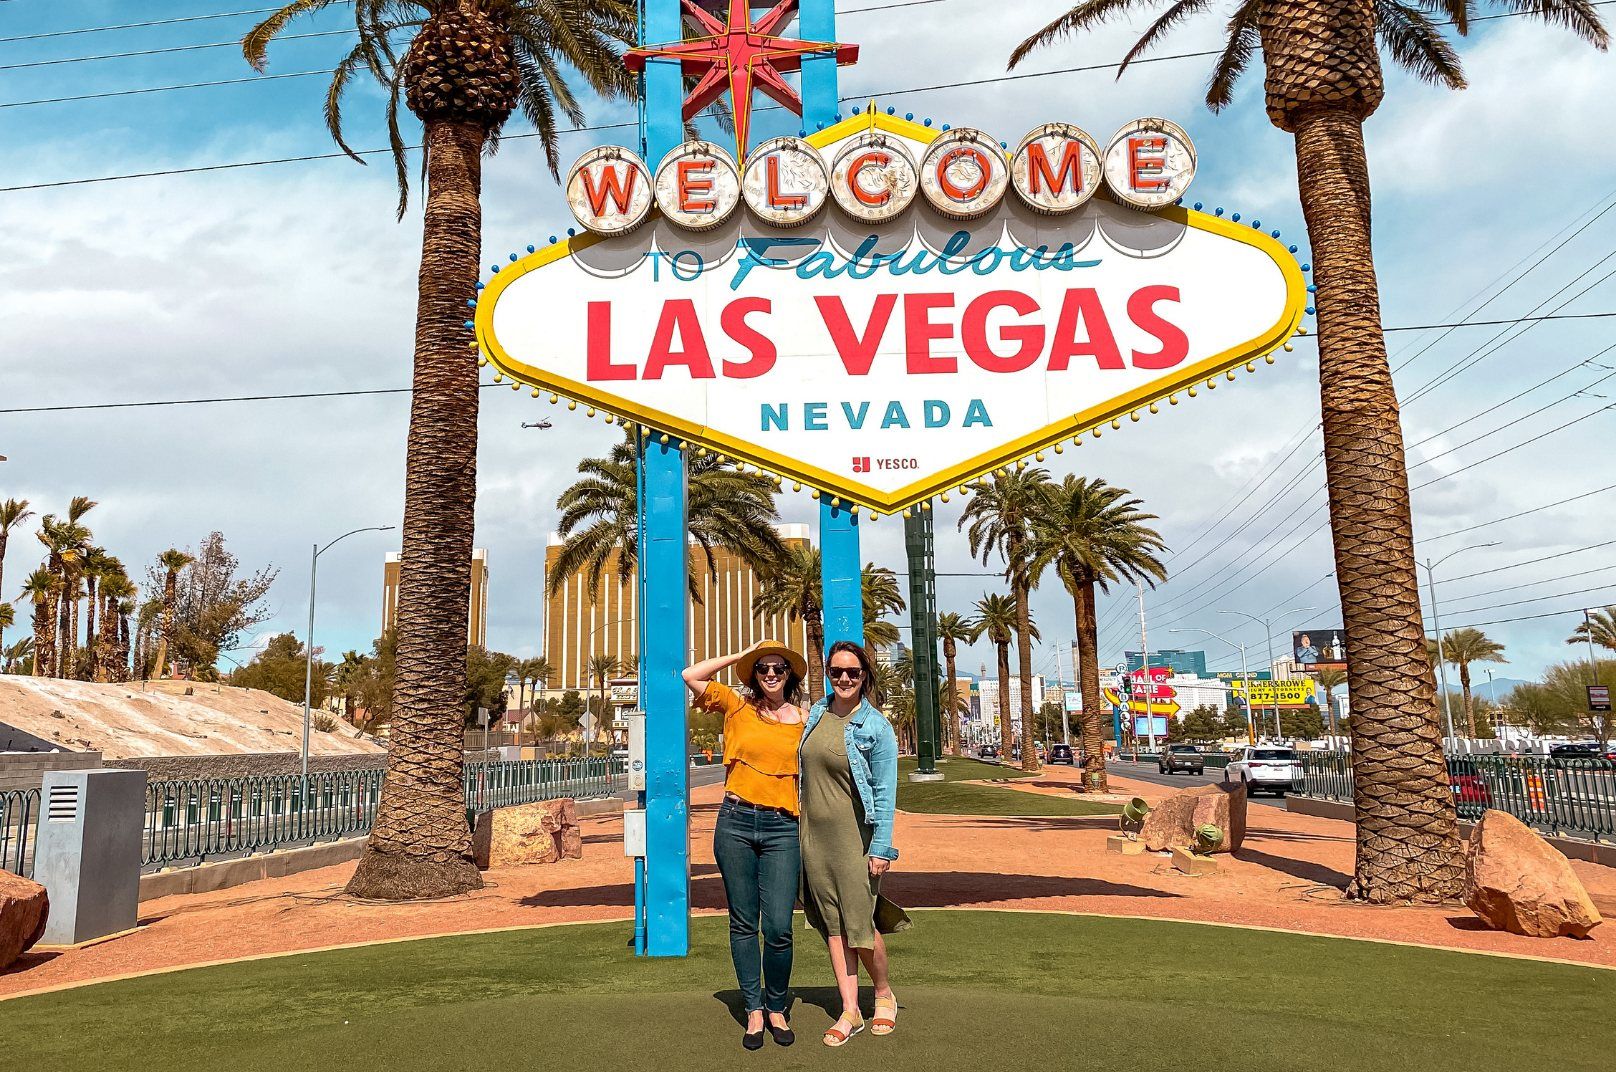 plan a Las Vegas birthday trip